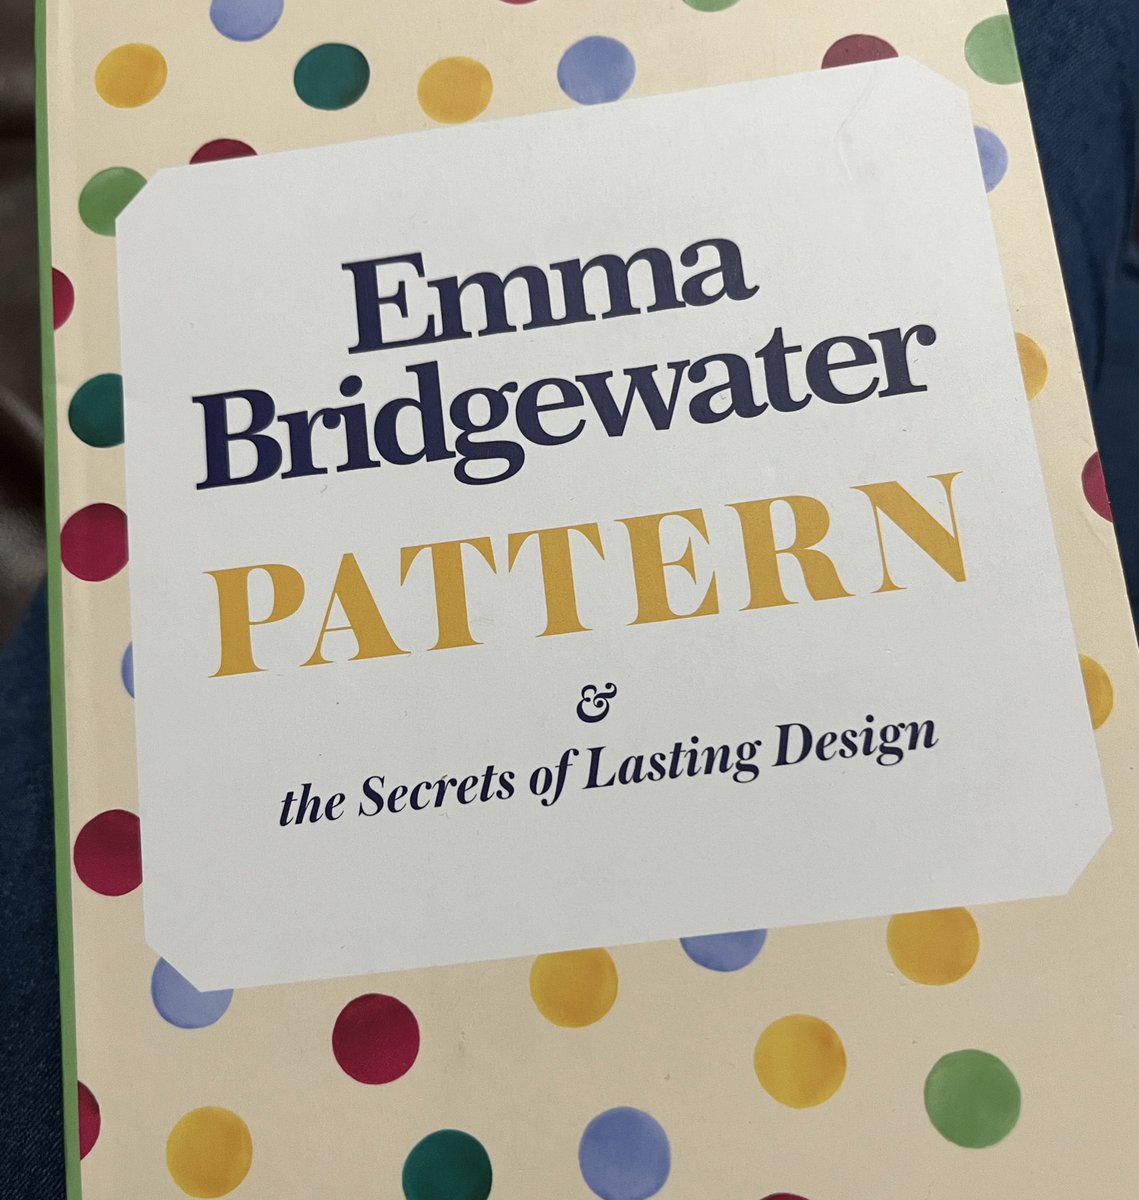 New book day! My inner design geek is really look forward to this 😁❤️ Thanks to my @creativemindsan Secret Santa 🎁
#emmabridgewater #designgeek
@EmmaBridgewater